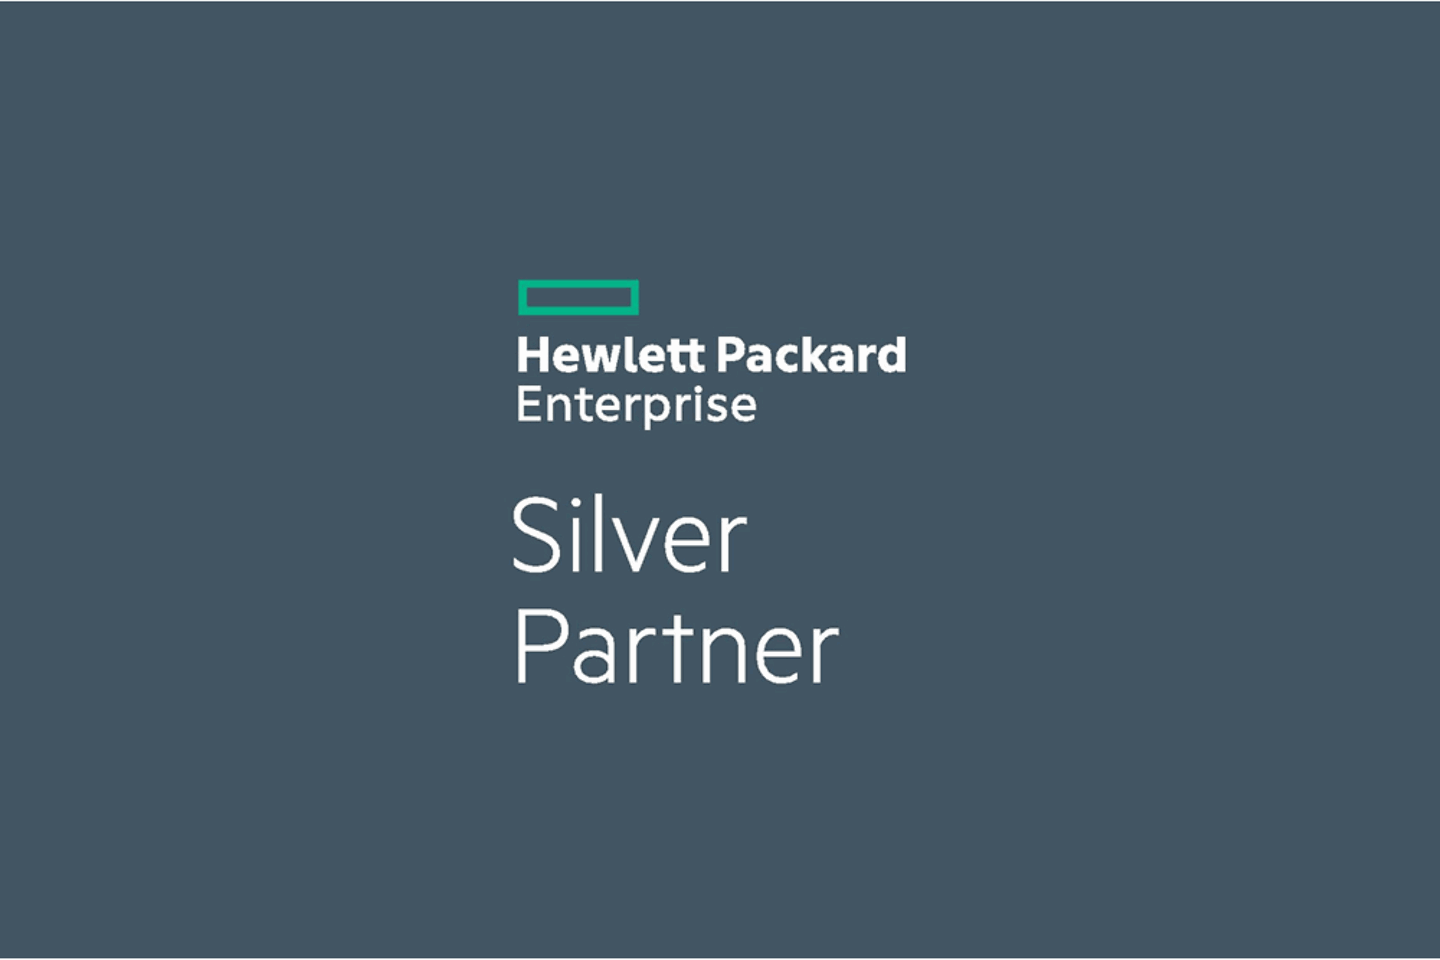 Hewlett Packard Enterprise logo and Silver Partner beneath it